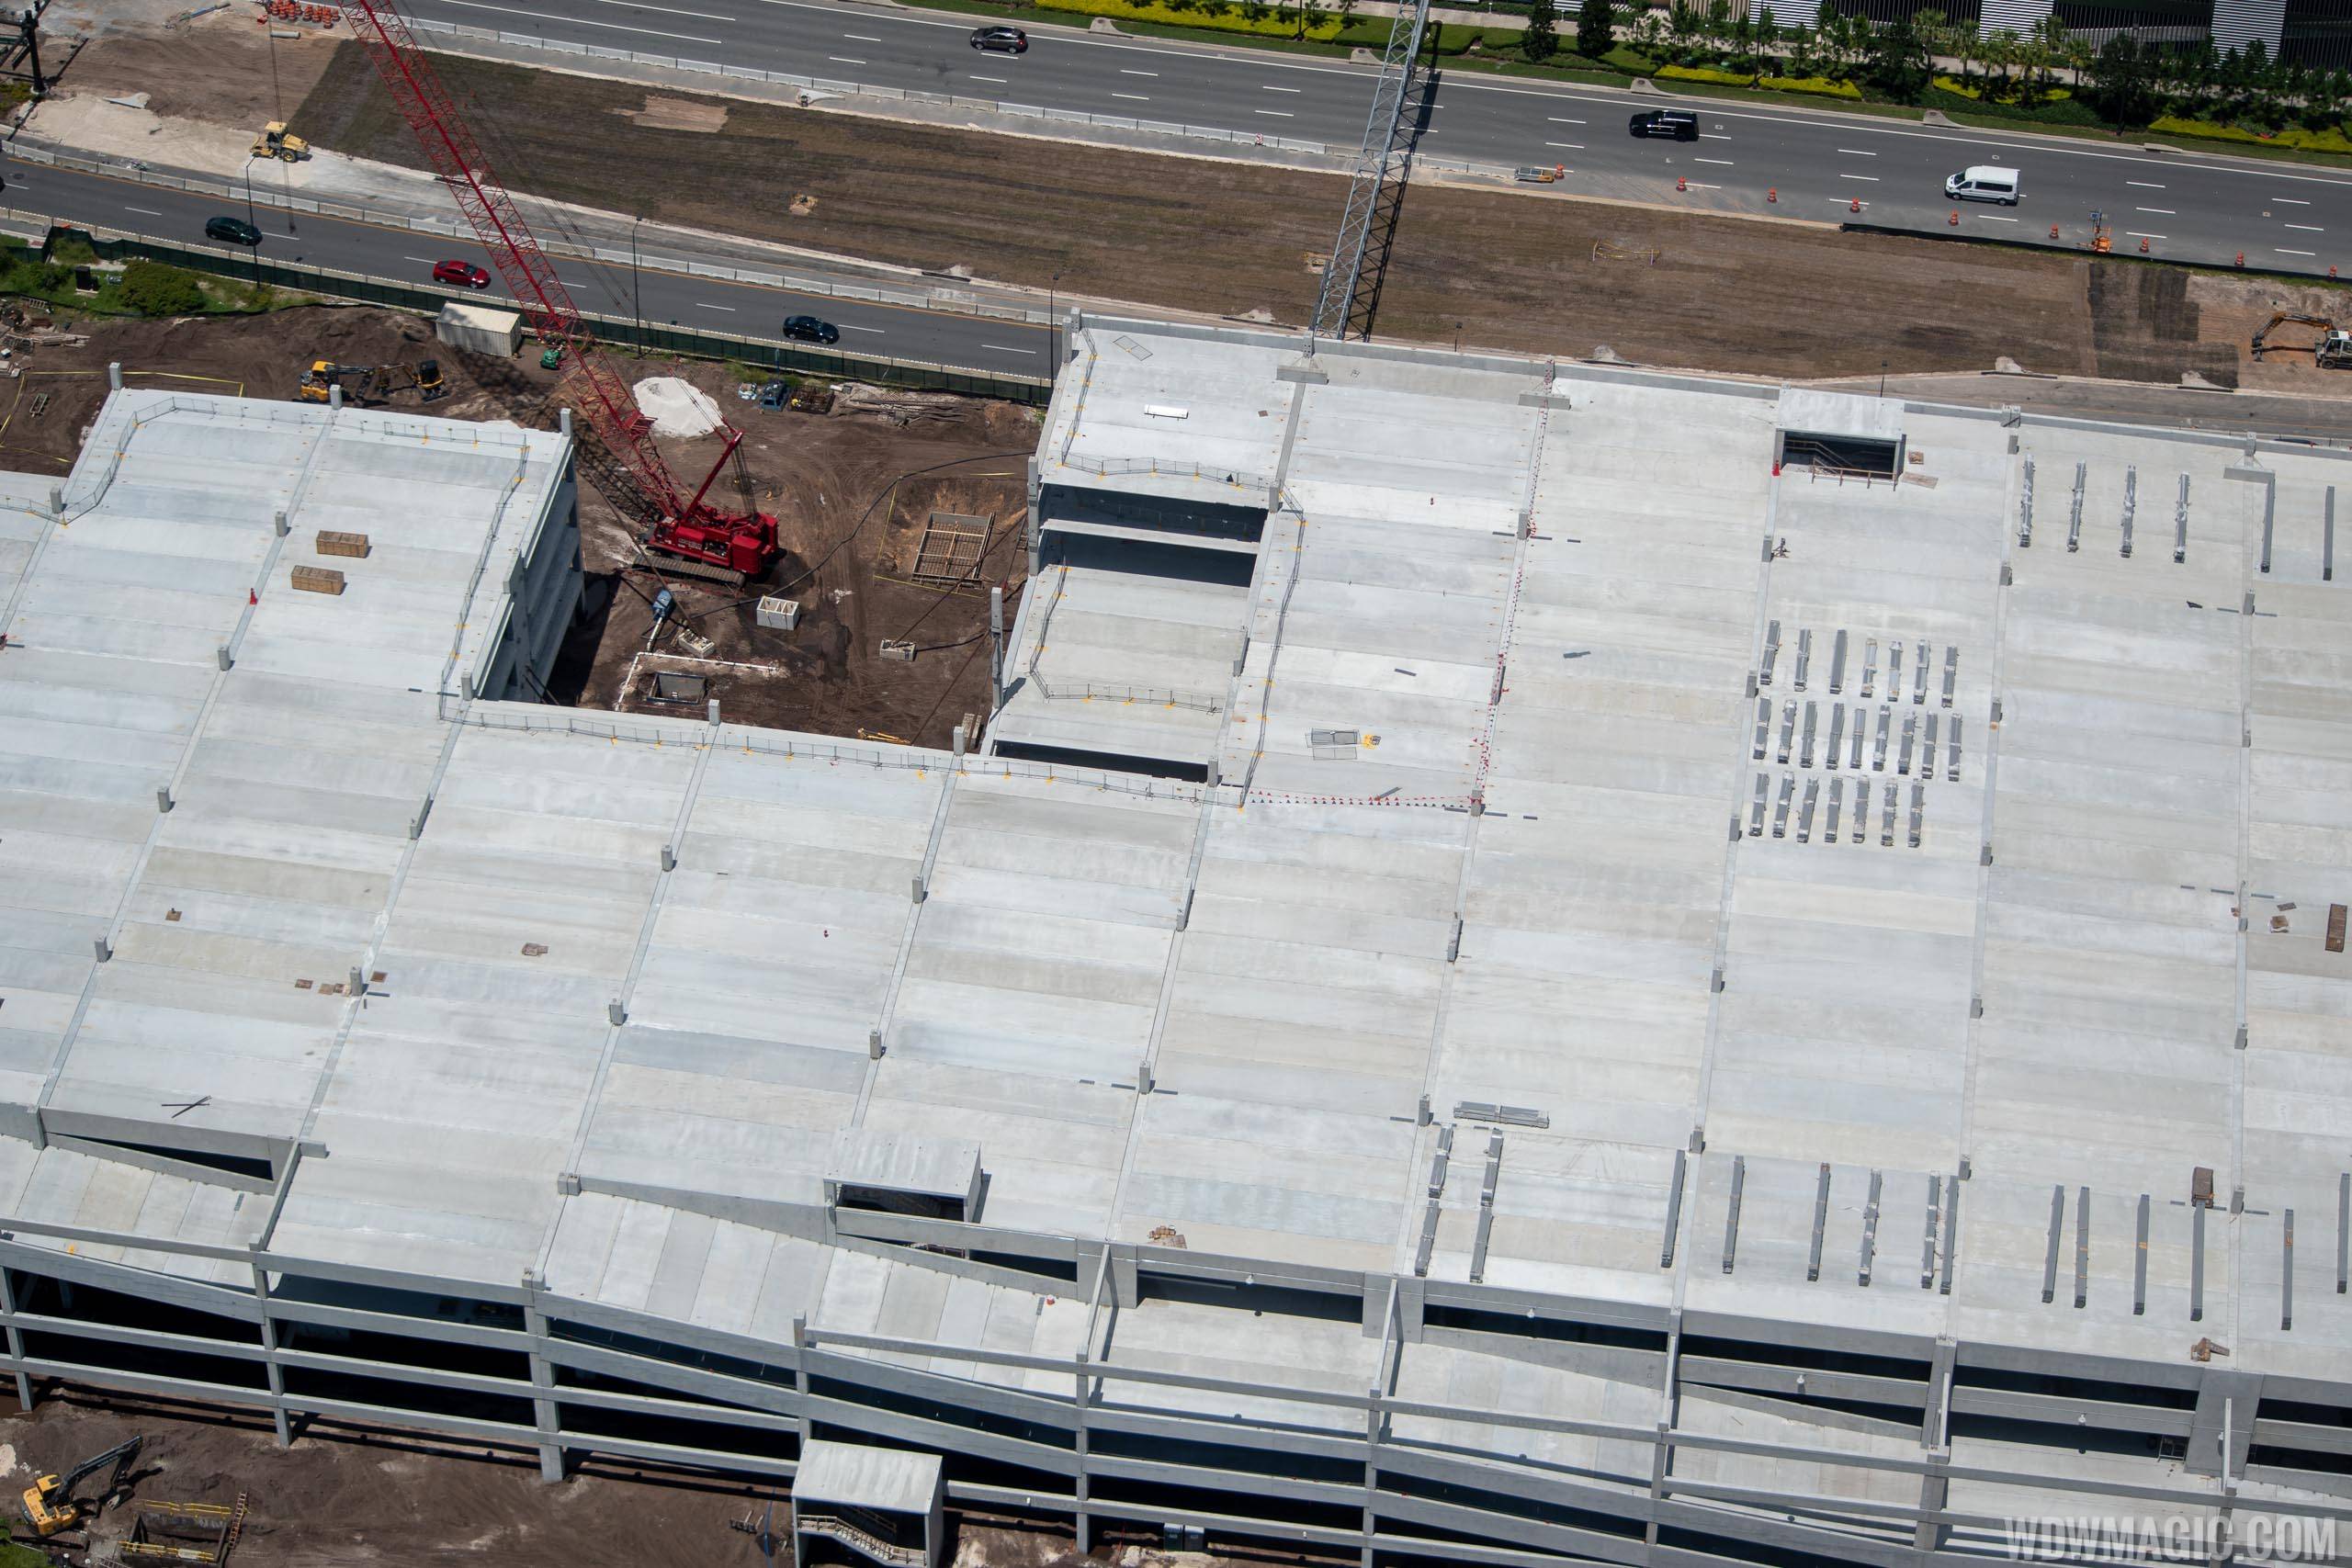 Disney Springs third parking lot construction - August 2018